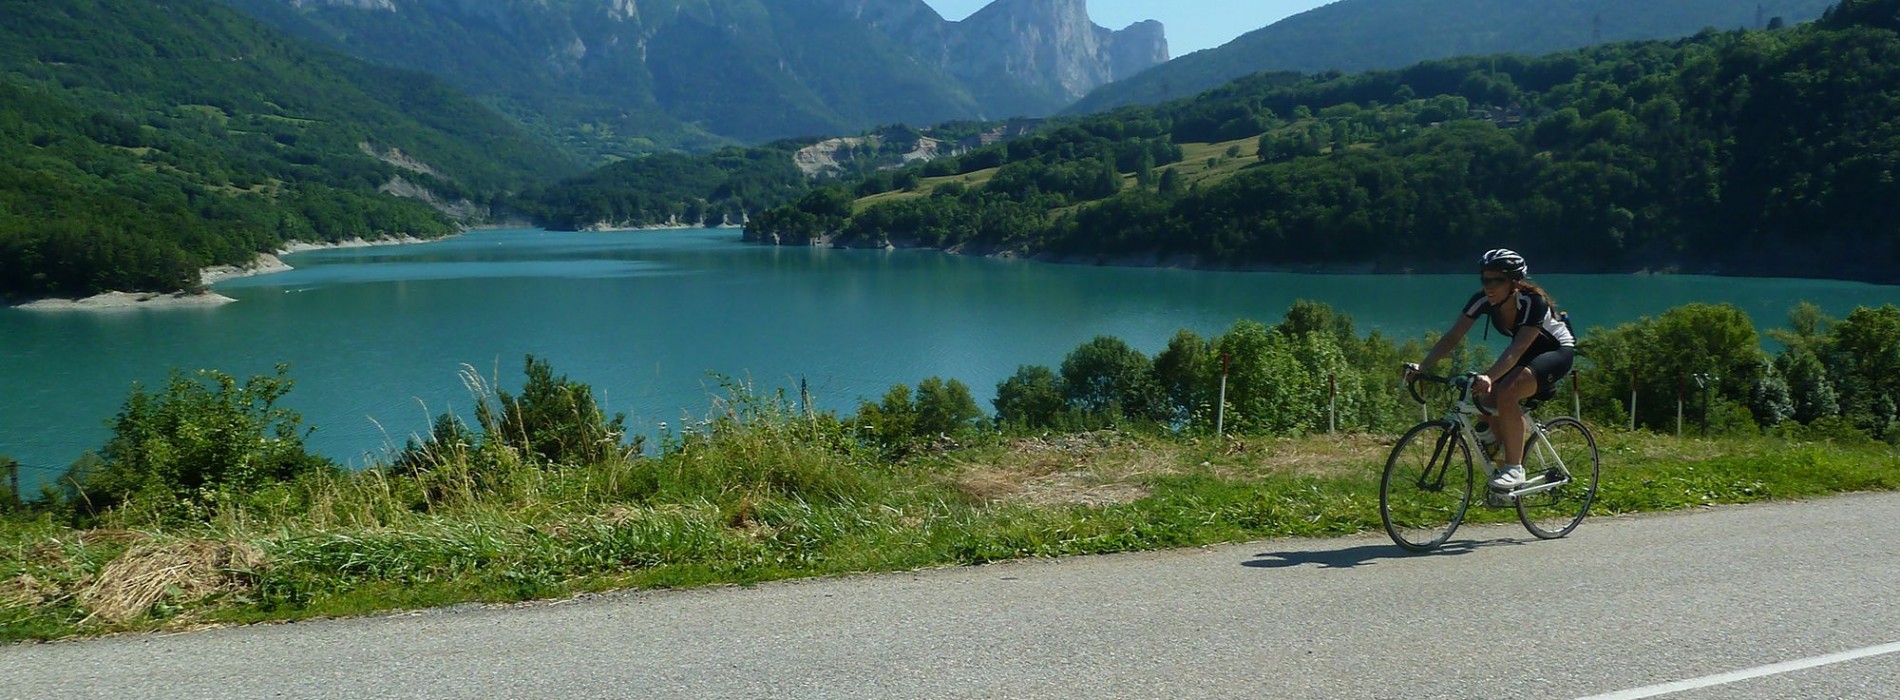 Cycling_next_to_Lake_Geneva_Switzerland.jpg